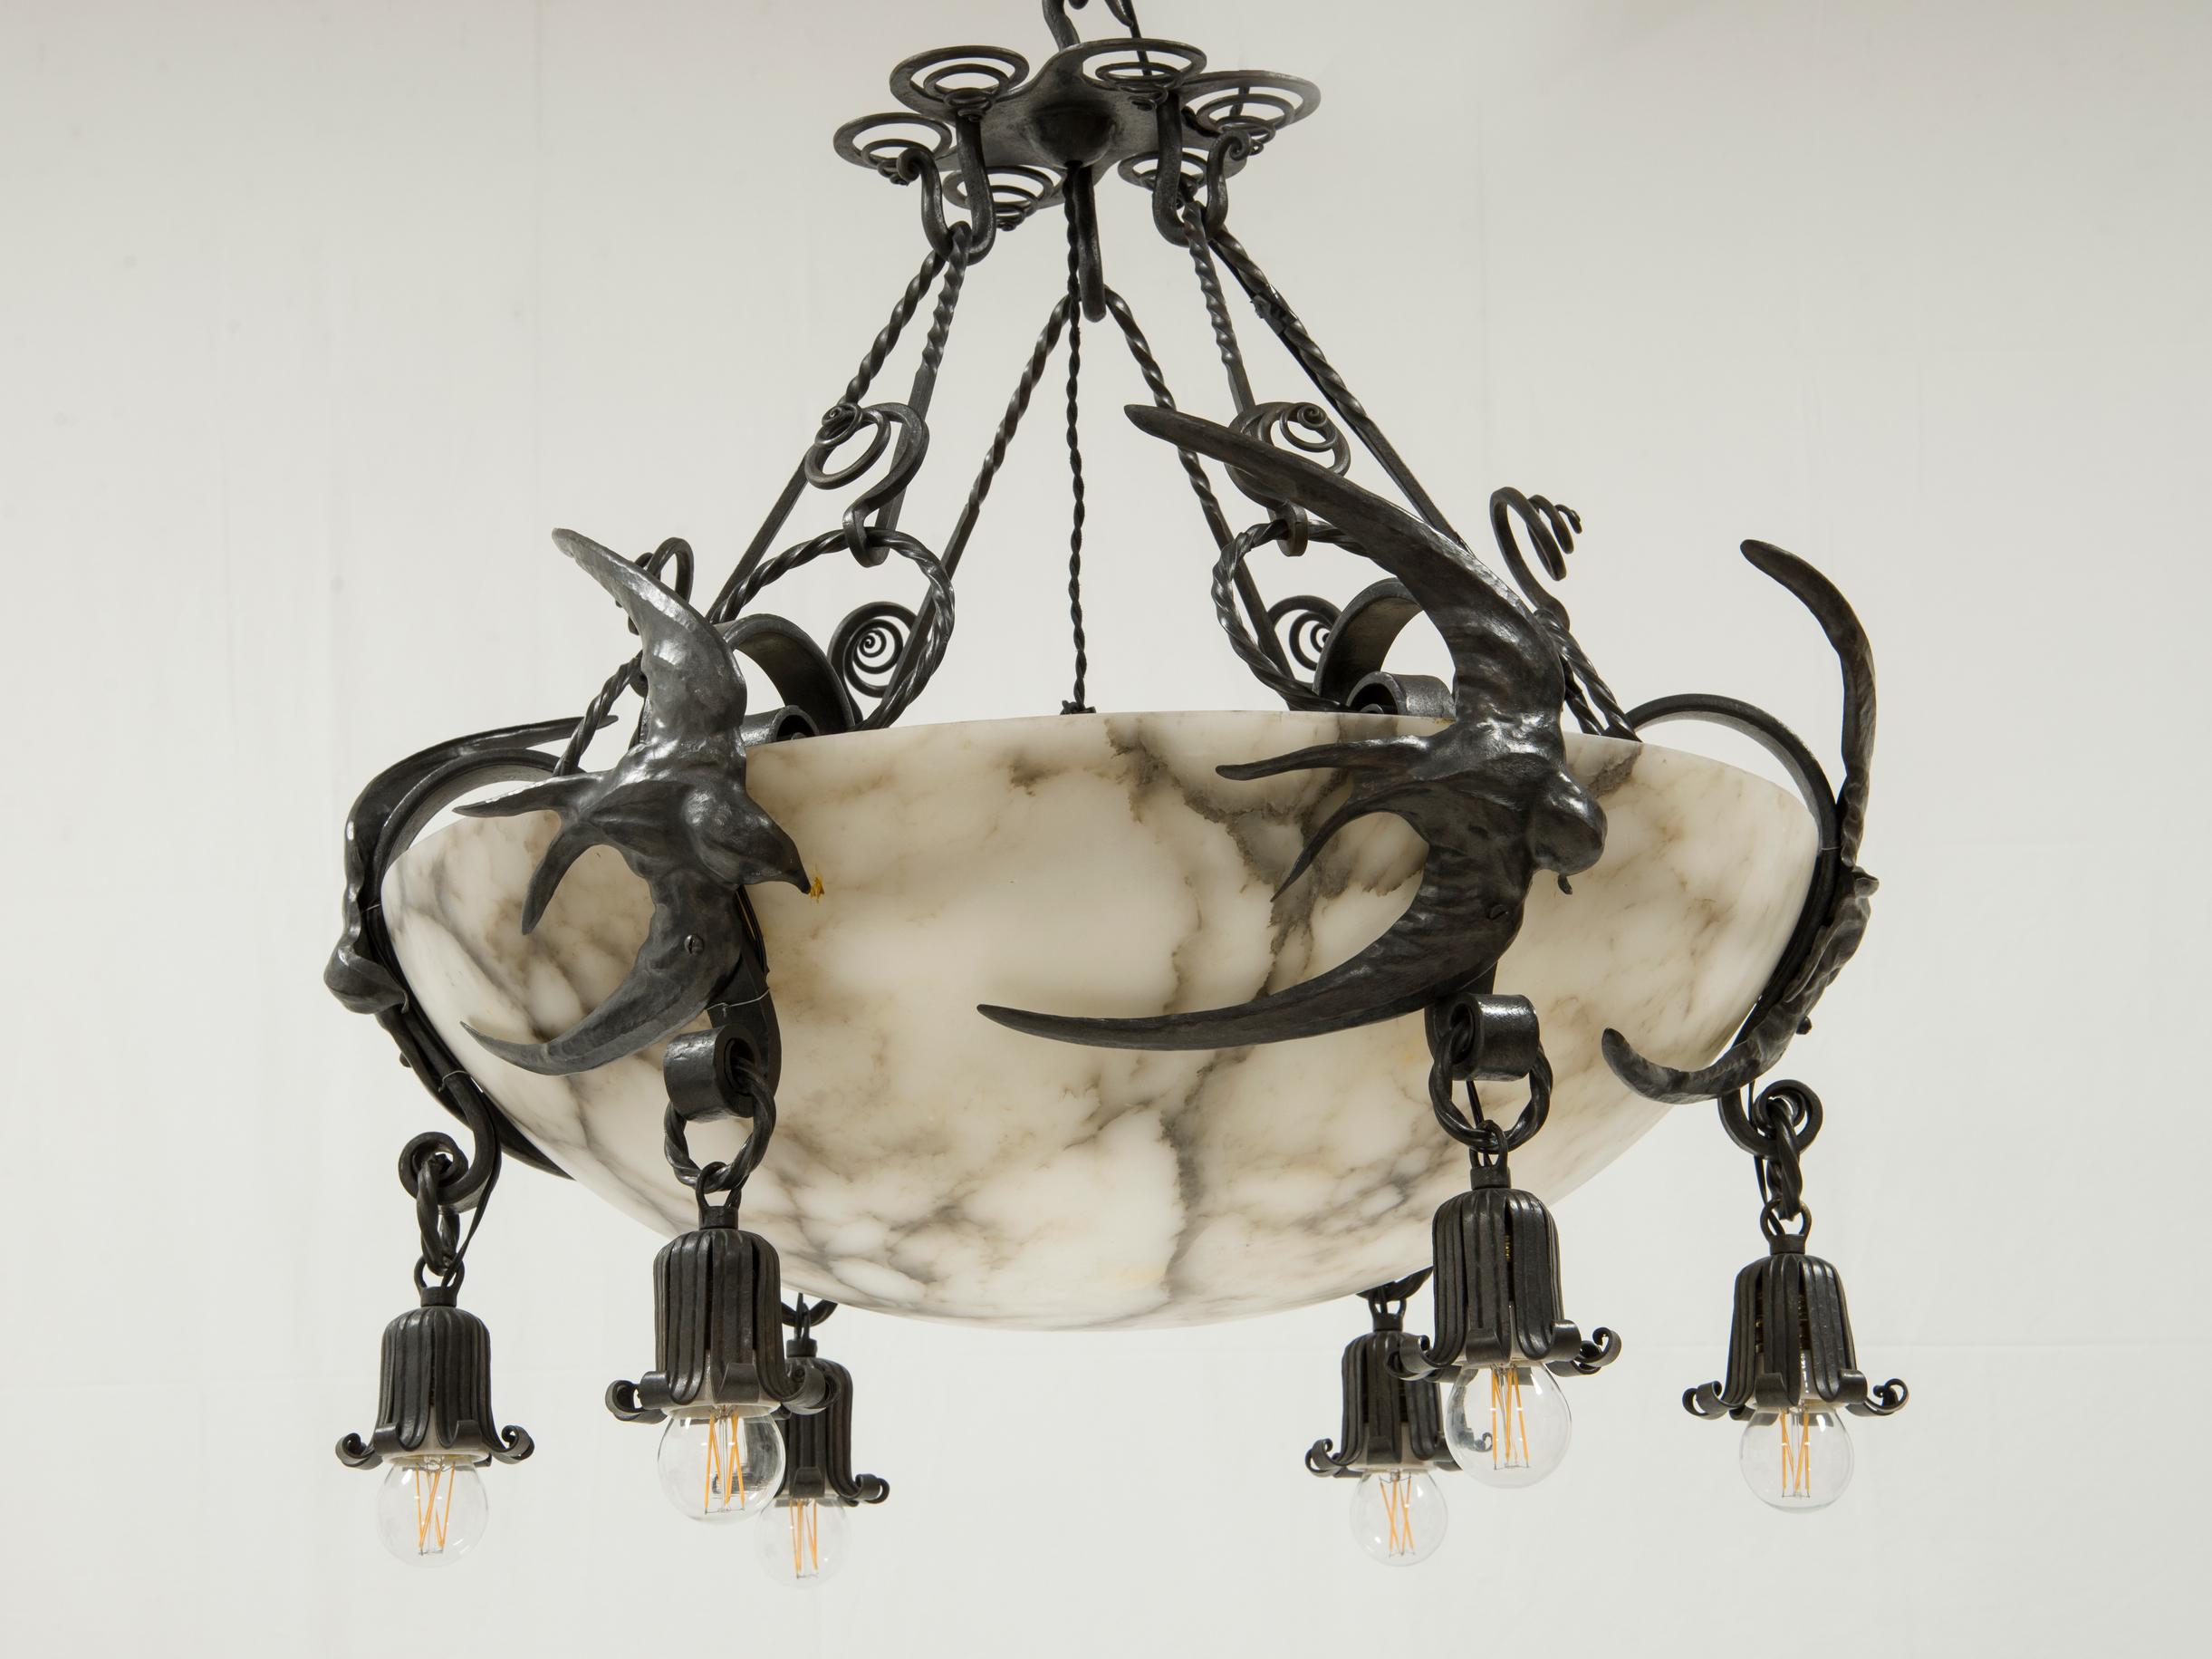 Alessandro Mazzucotelli
Swallow chandelier
Wrought iron, alabaster
Italy, circa 1920
H 68 x D 58 cm